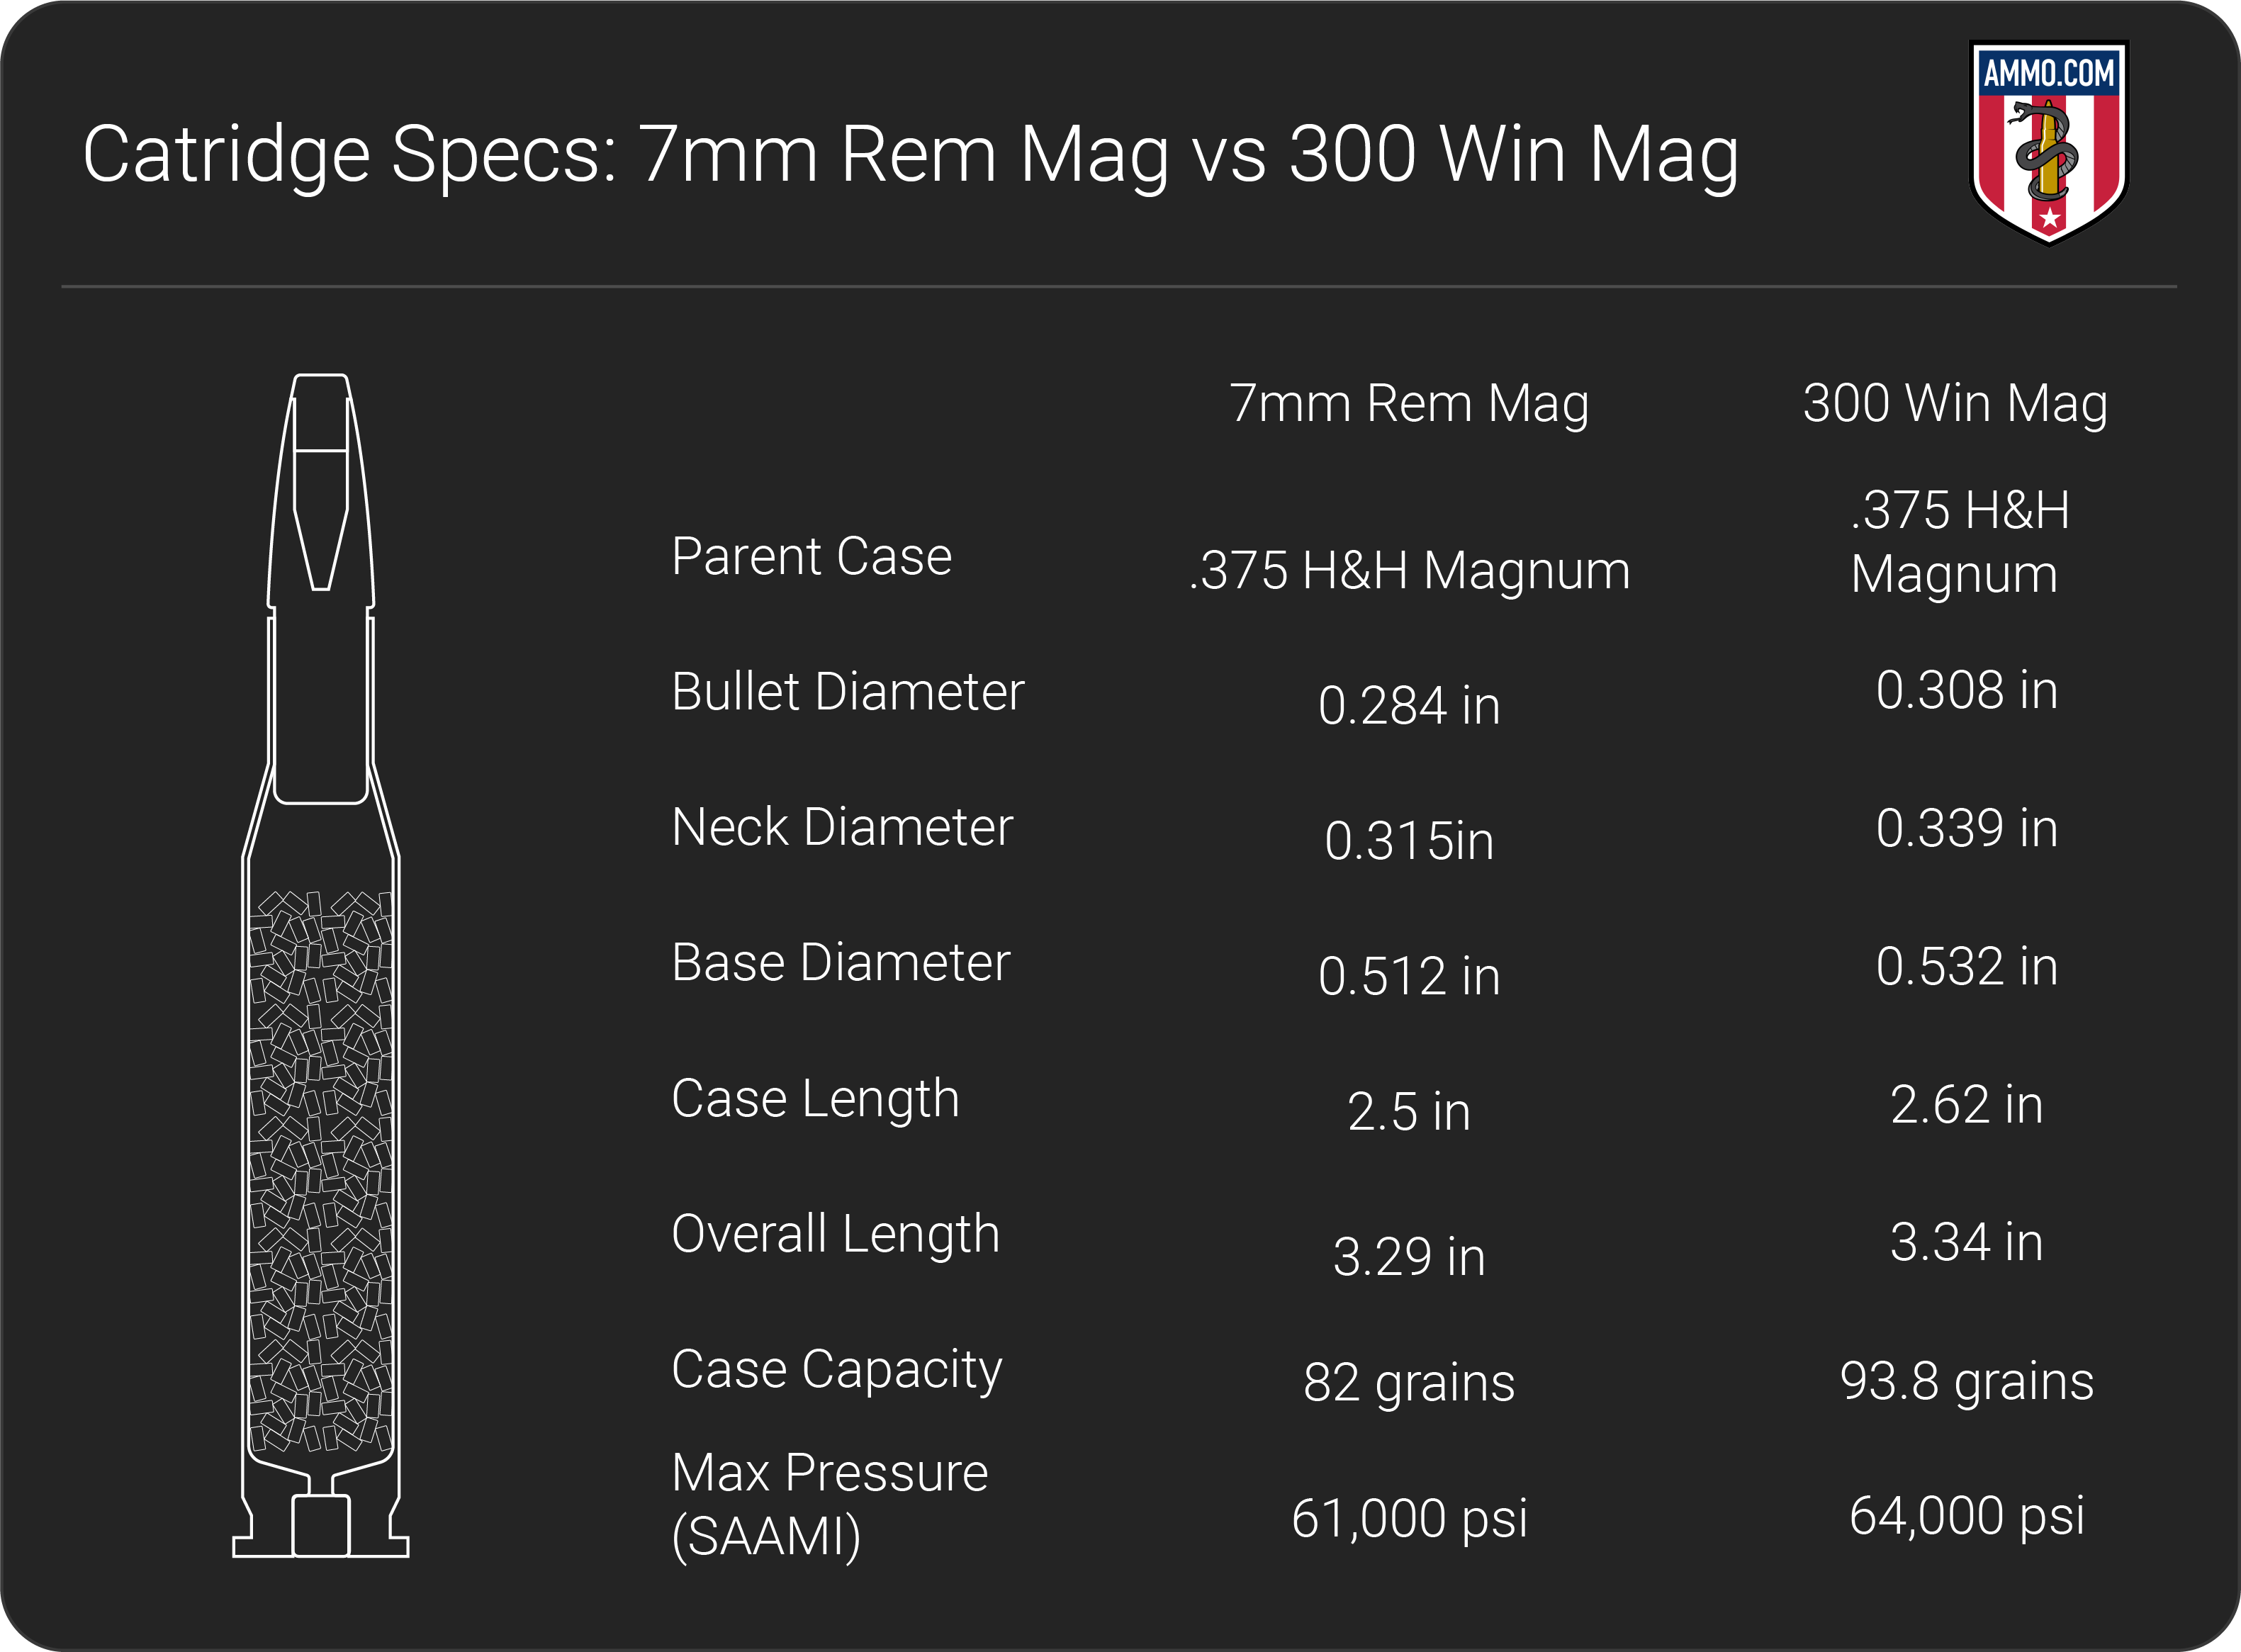 7mm Rem Mag vs 300 Win Mag dimension chart